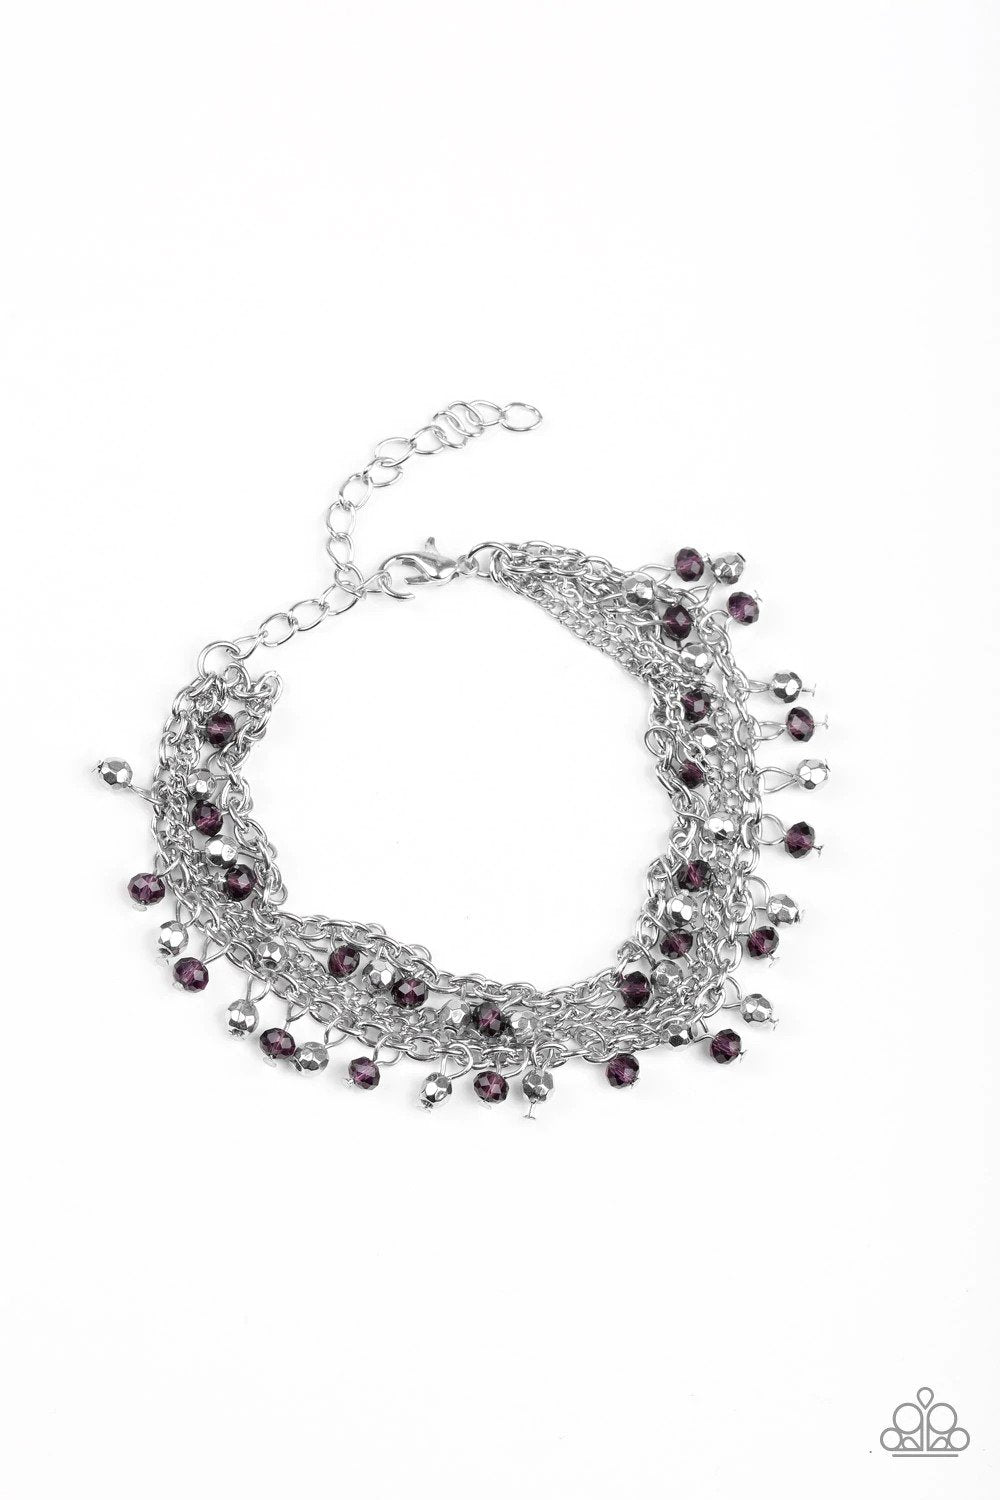 Cash Confidence Purple Bracelet - Paparazzi Accessories- lightbox - CarasShop.com - $5 Jewelry by Cara Jewels